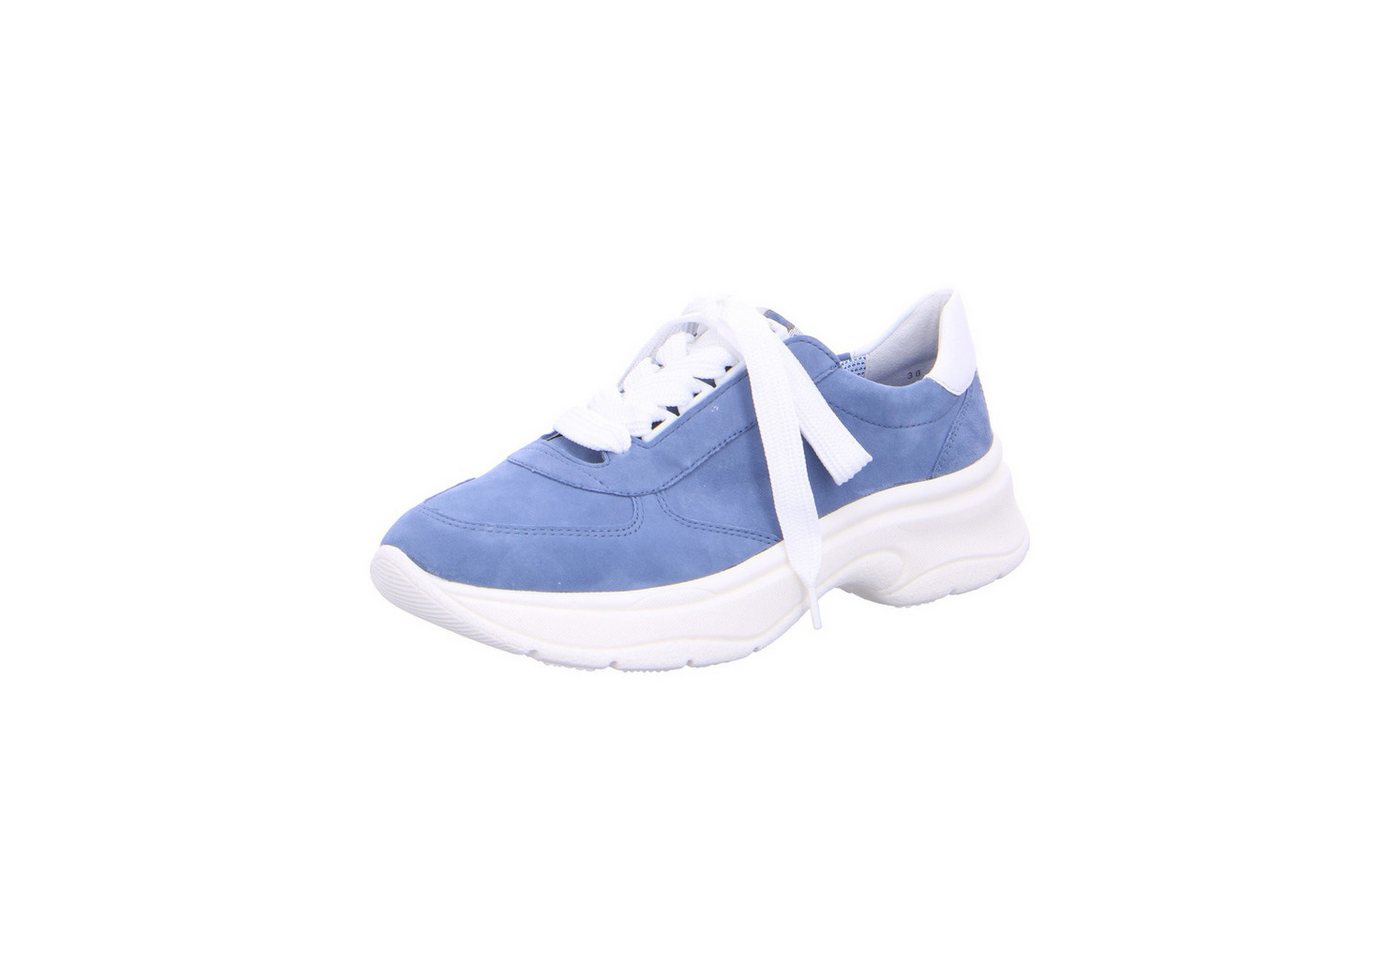 Ara Roma - Damen Schuhe Schnürschuh Sneaker Leder blau von Ara